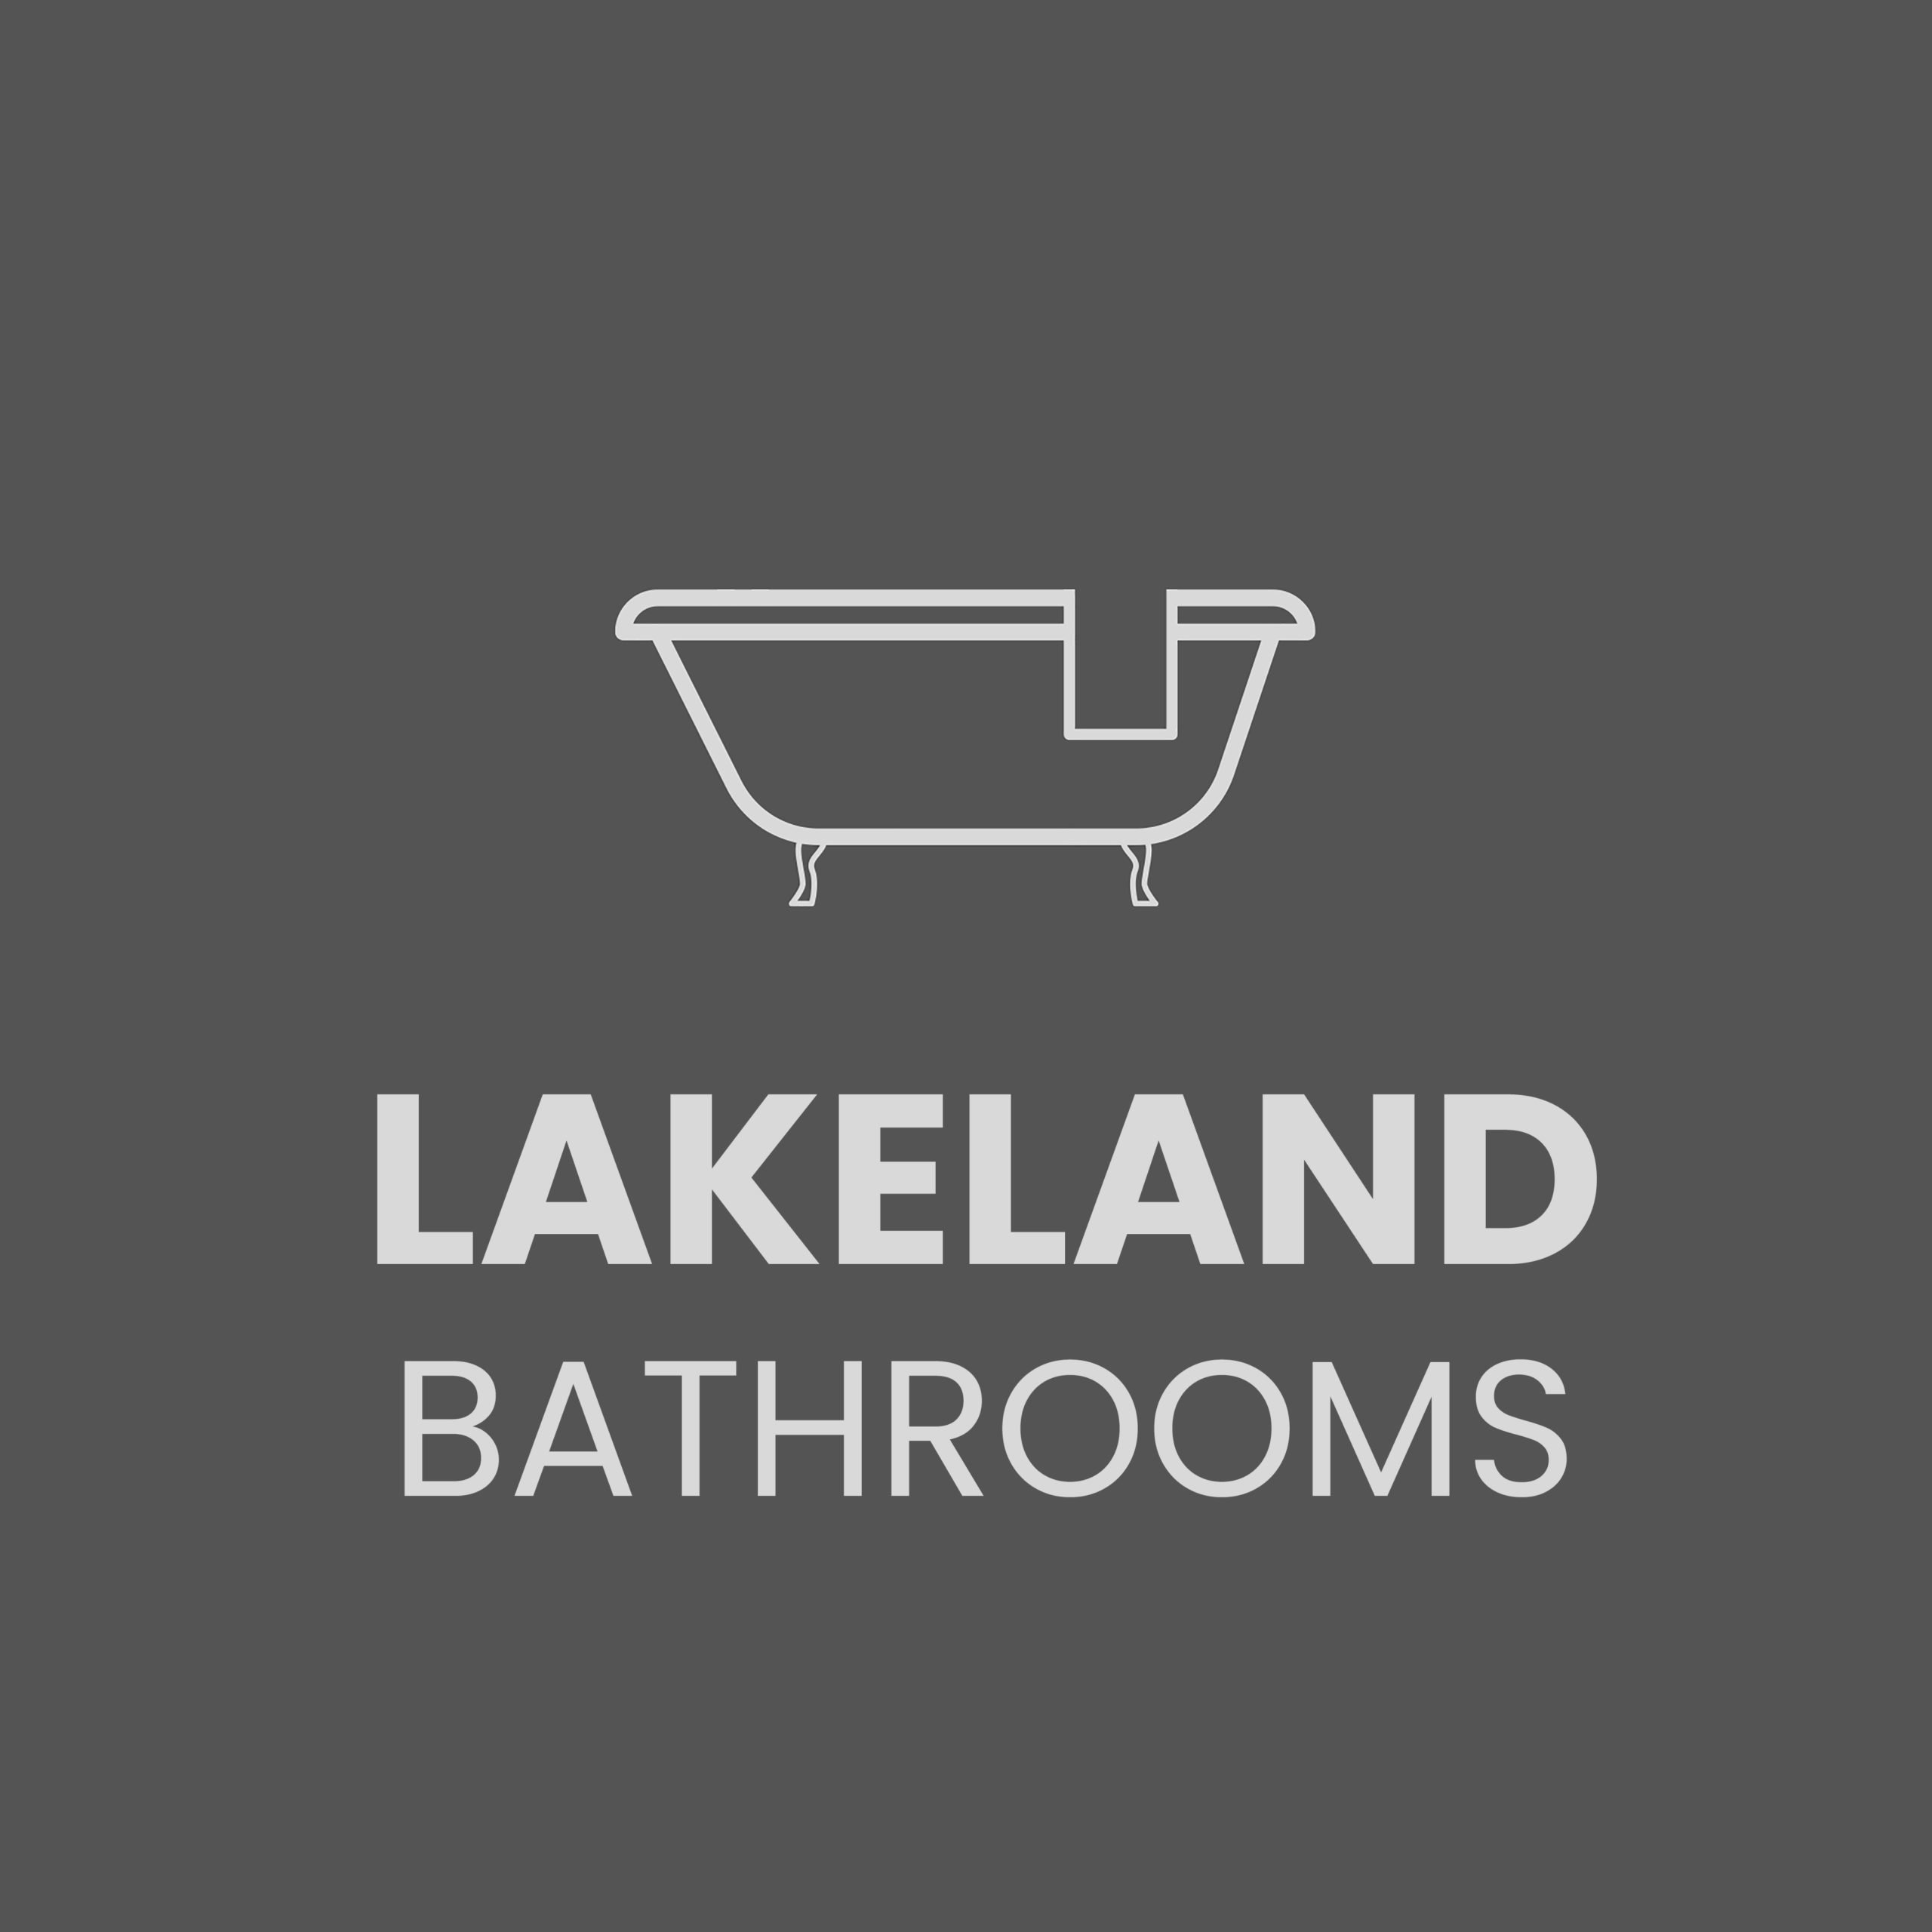 Lakeland Bathrooms